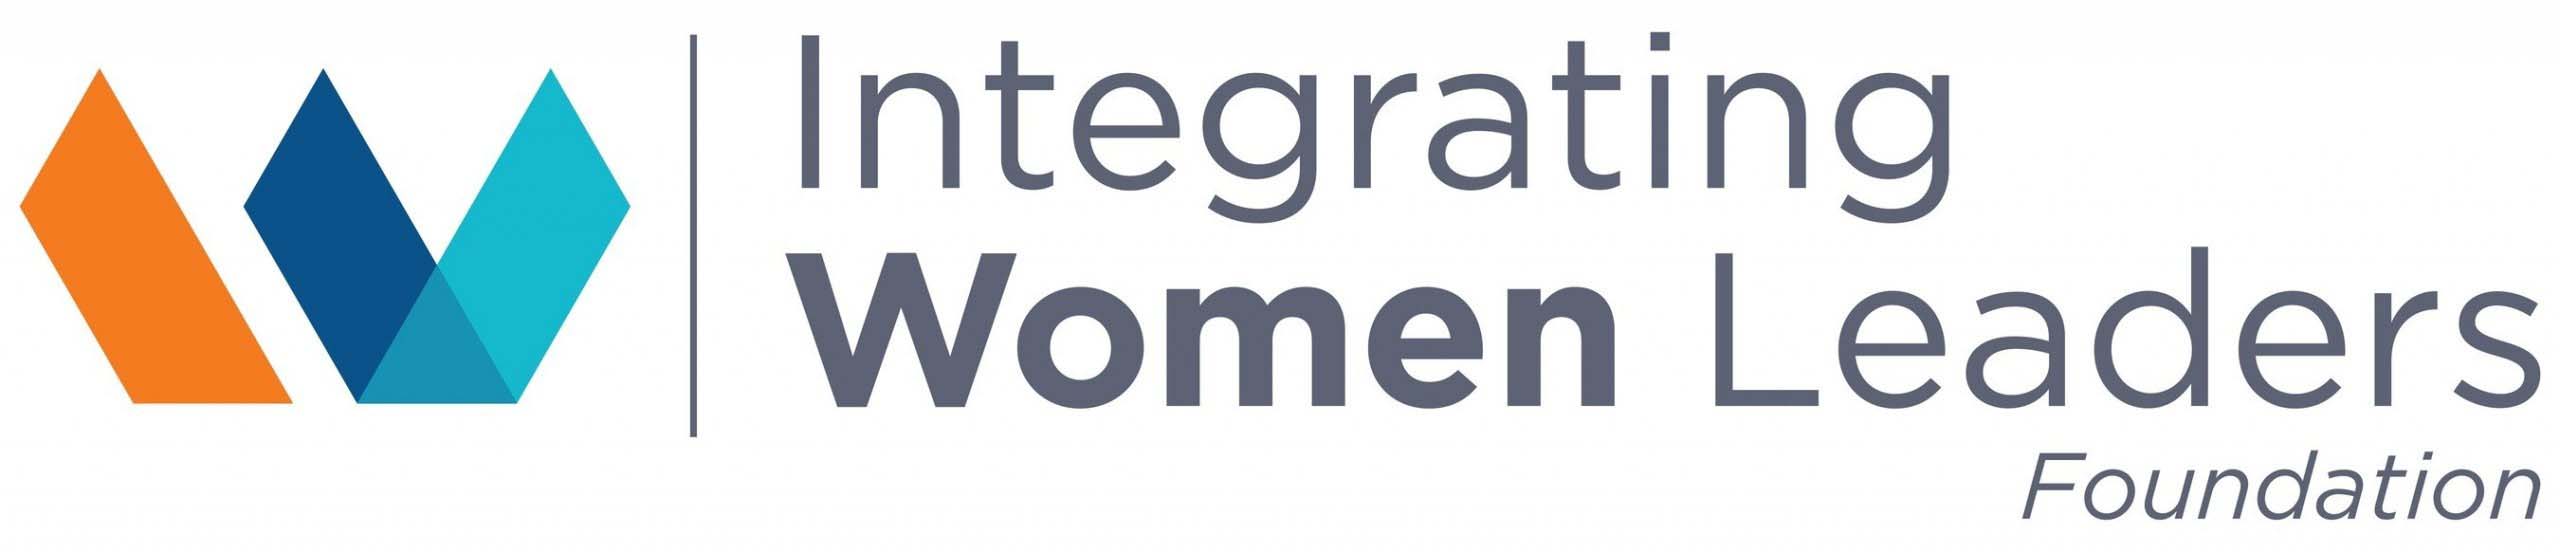 Integrating Women Leaders Foundation Logo 1